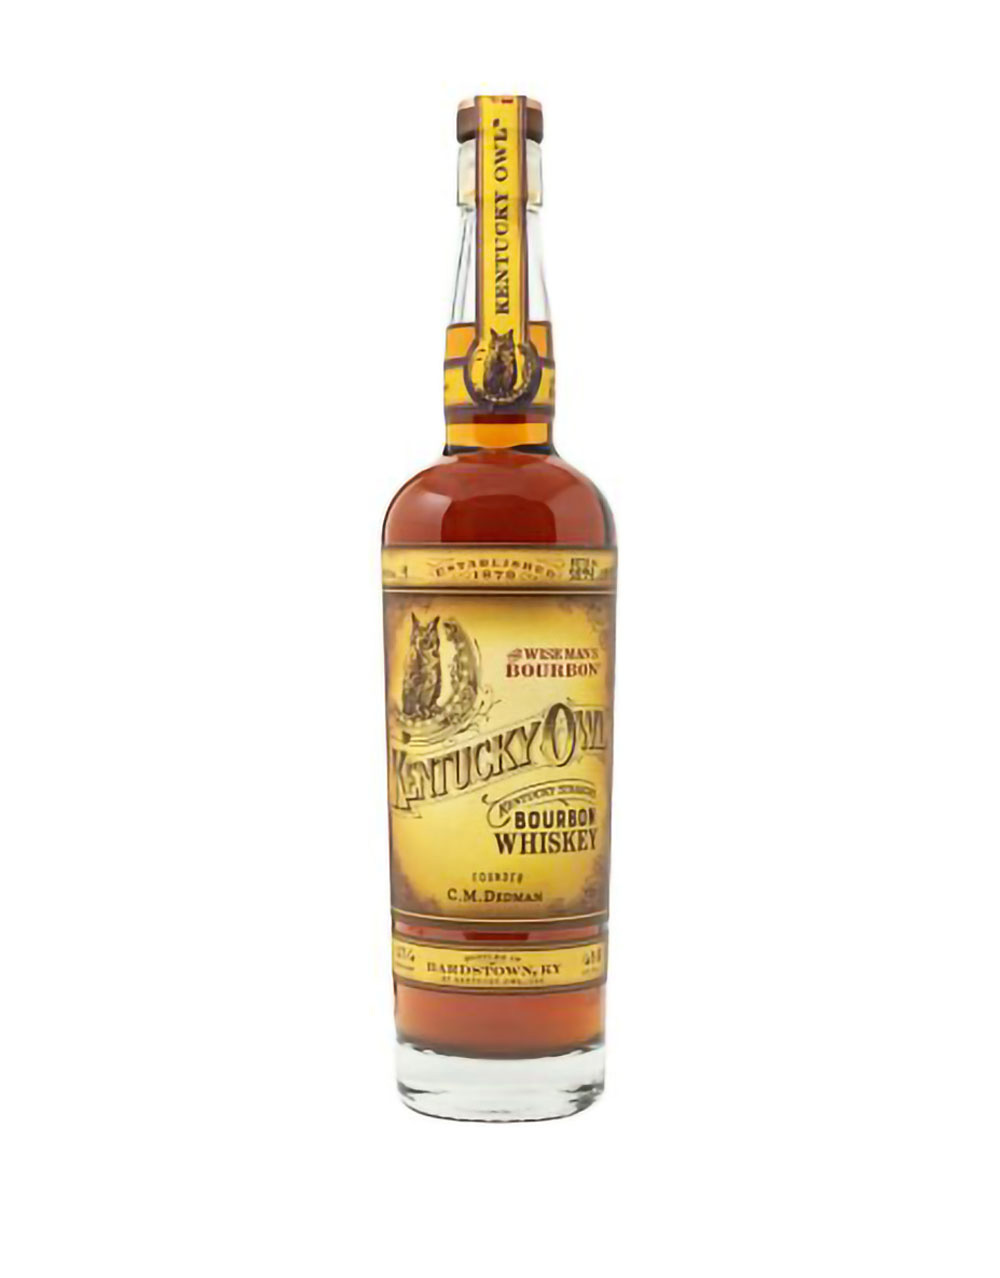 Kentucky Owl Straight Bourbon Whiskey